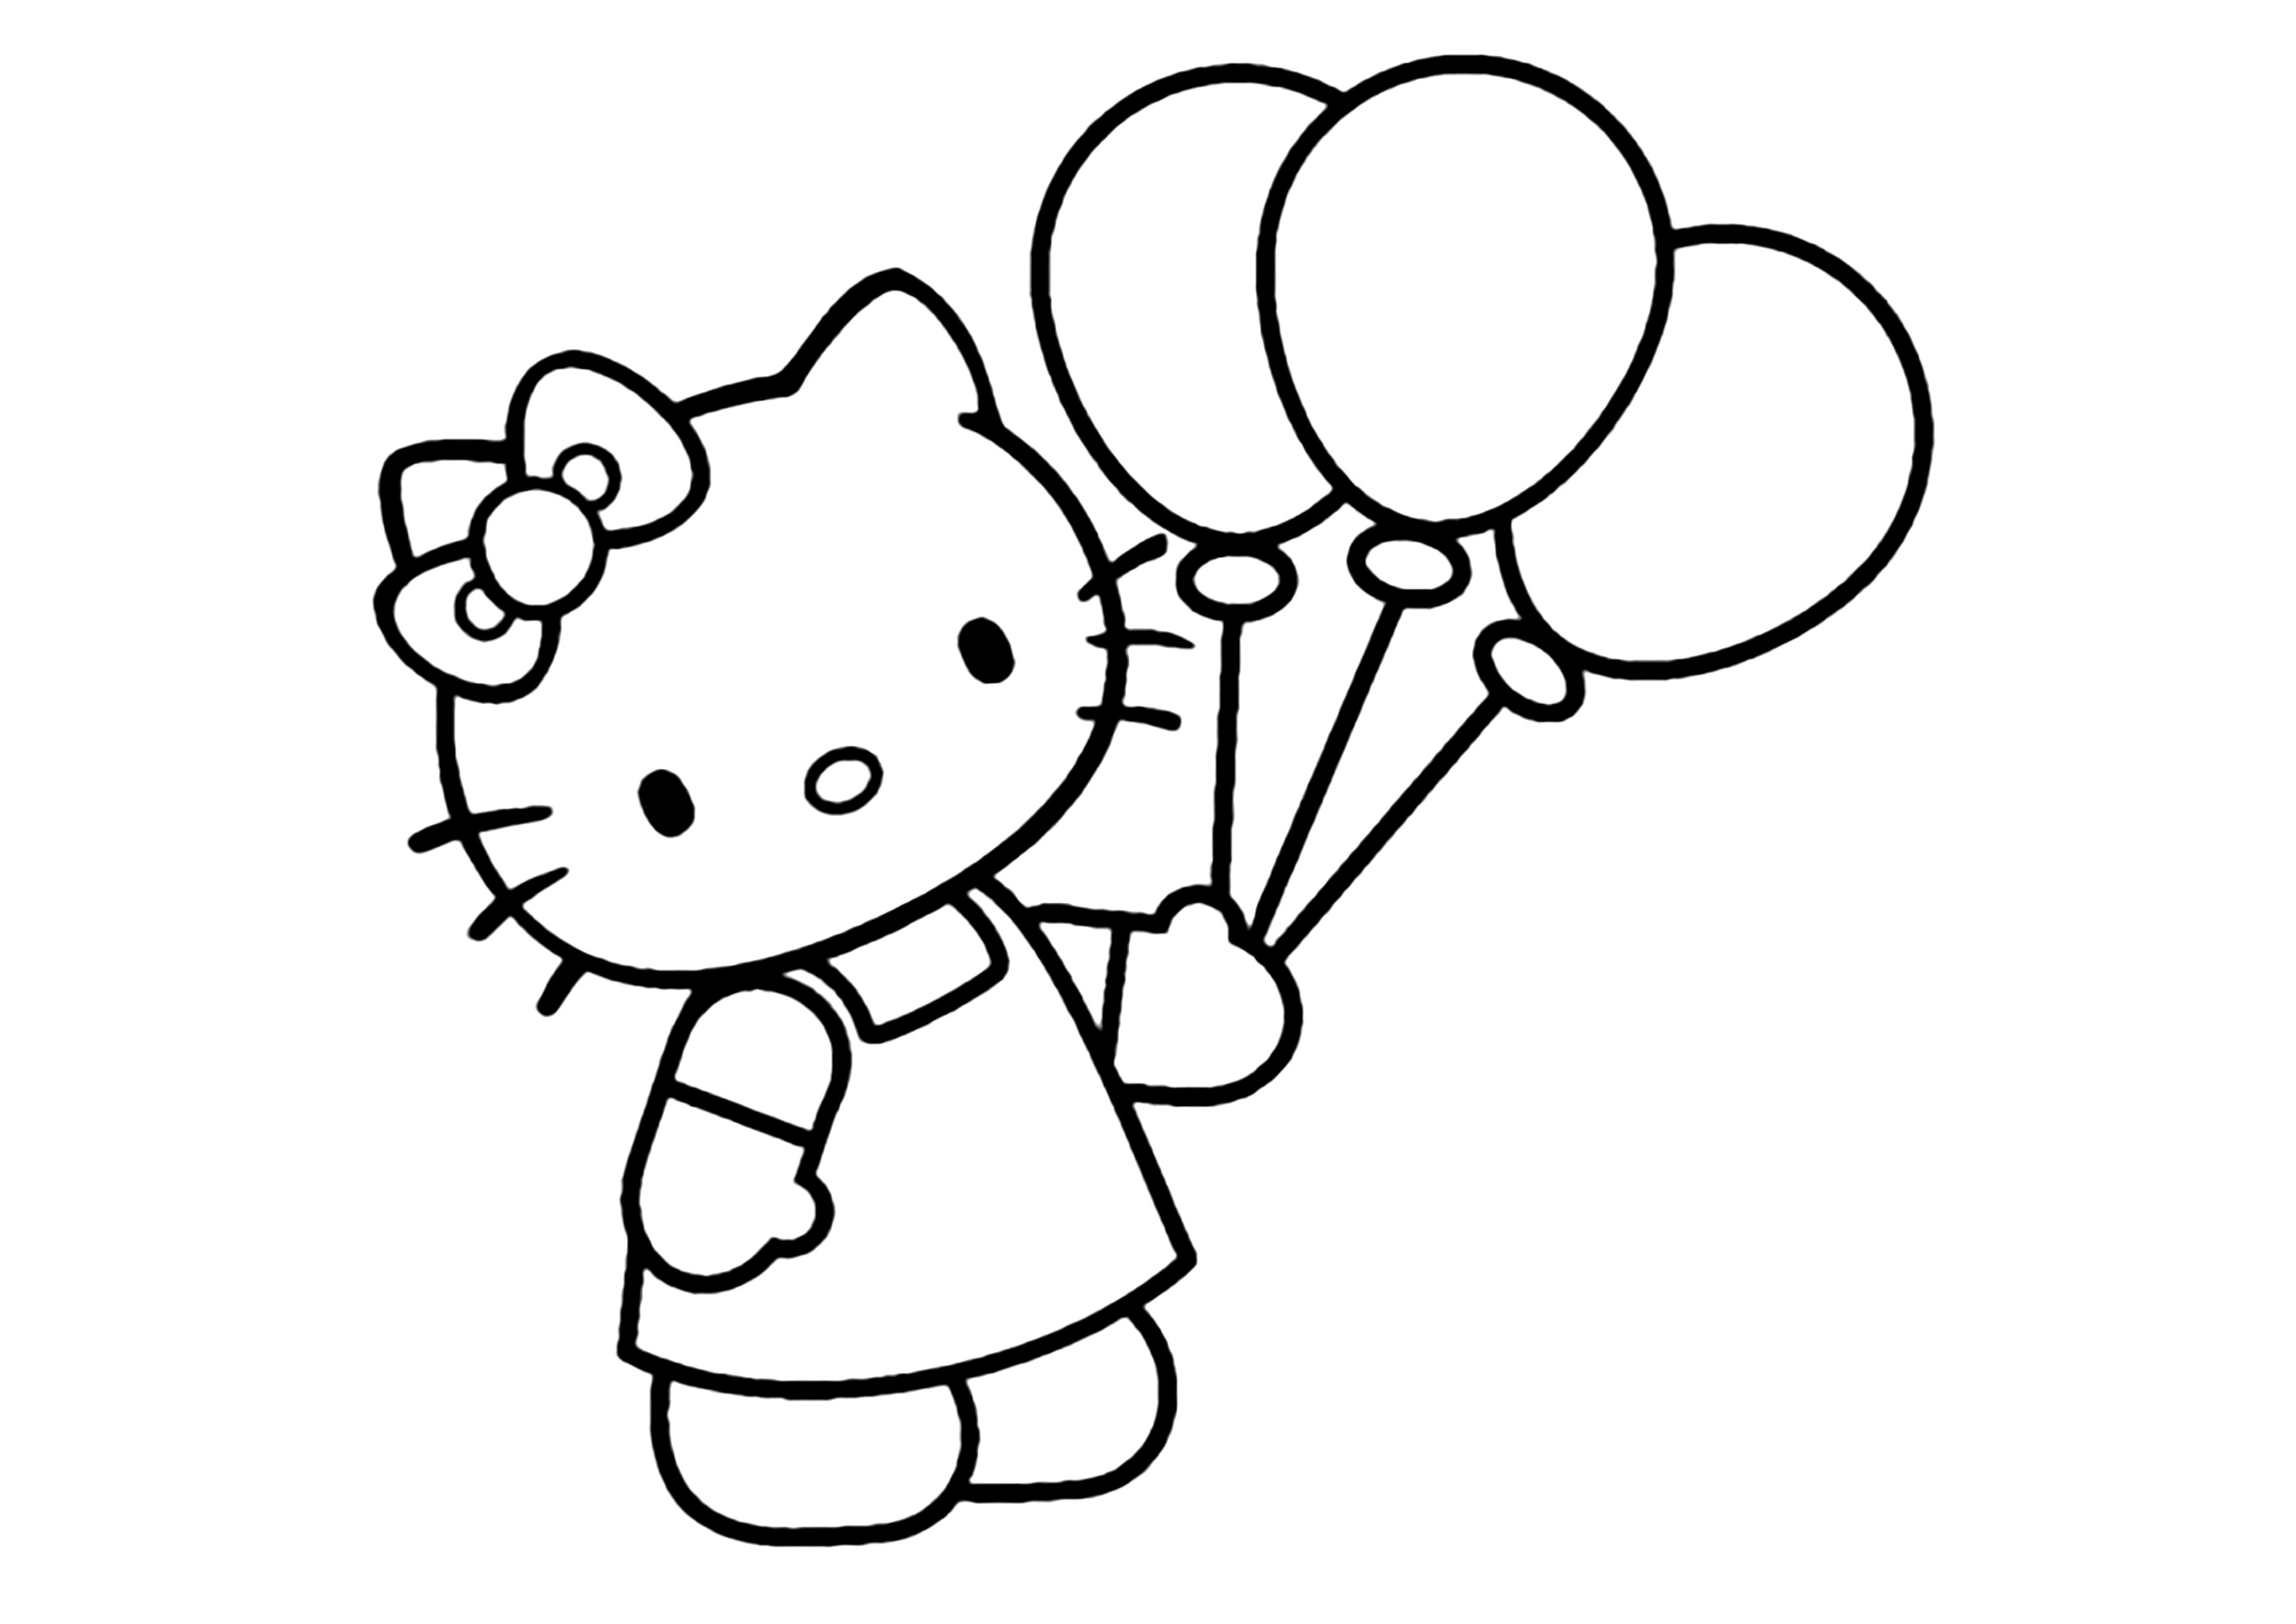 Hello Kitty with three balloons